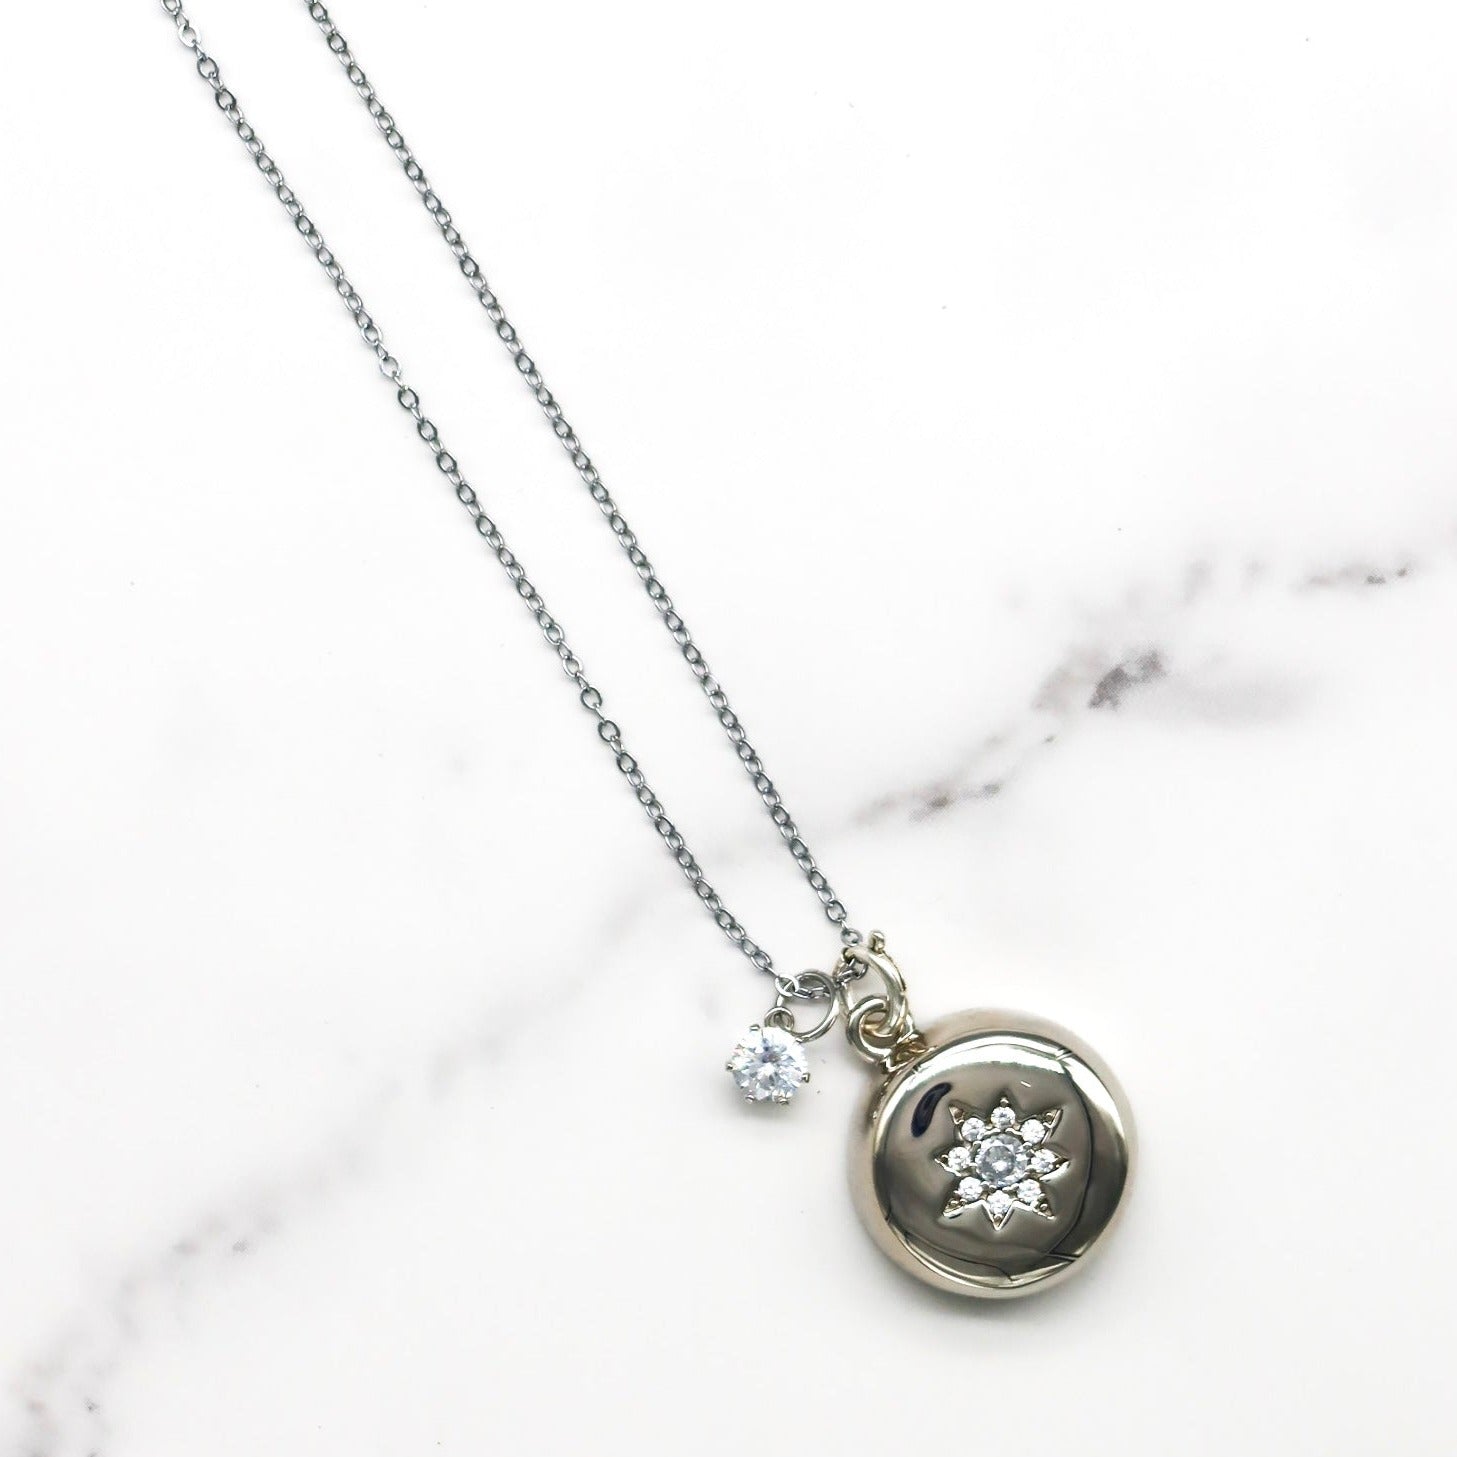 Embedded Star Necklace w/ CZ Stone - Sterling Silver